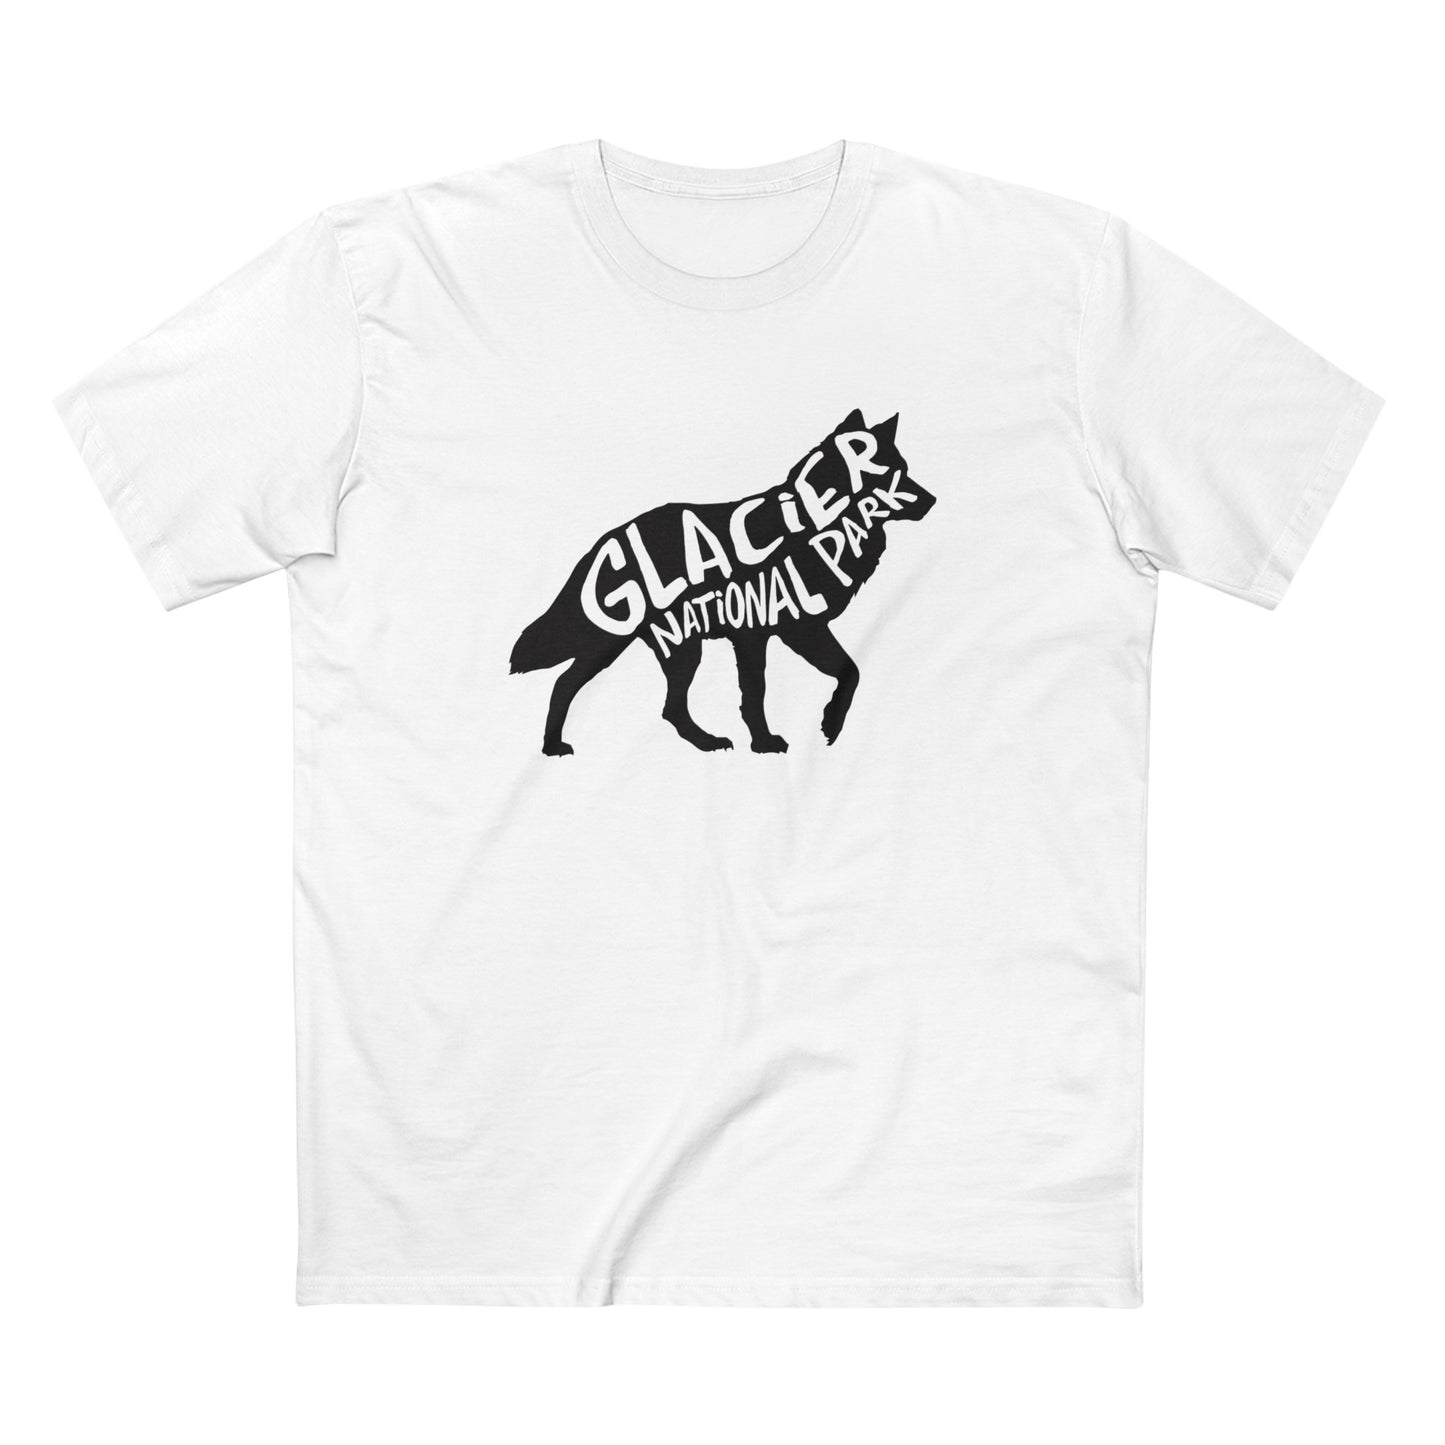 Glacier National Park T-Shirt - Gray Wolf